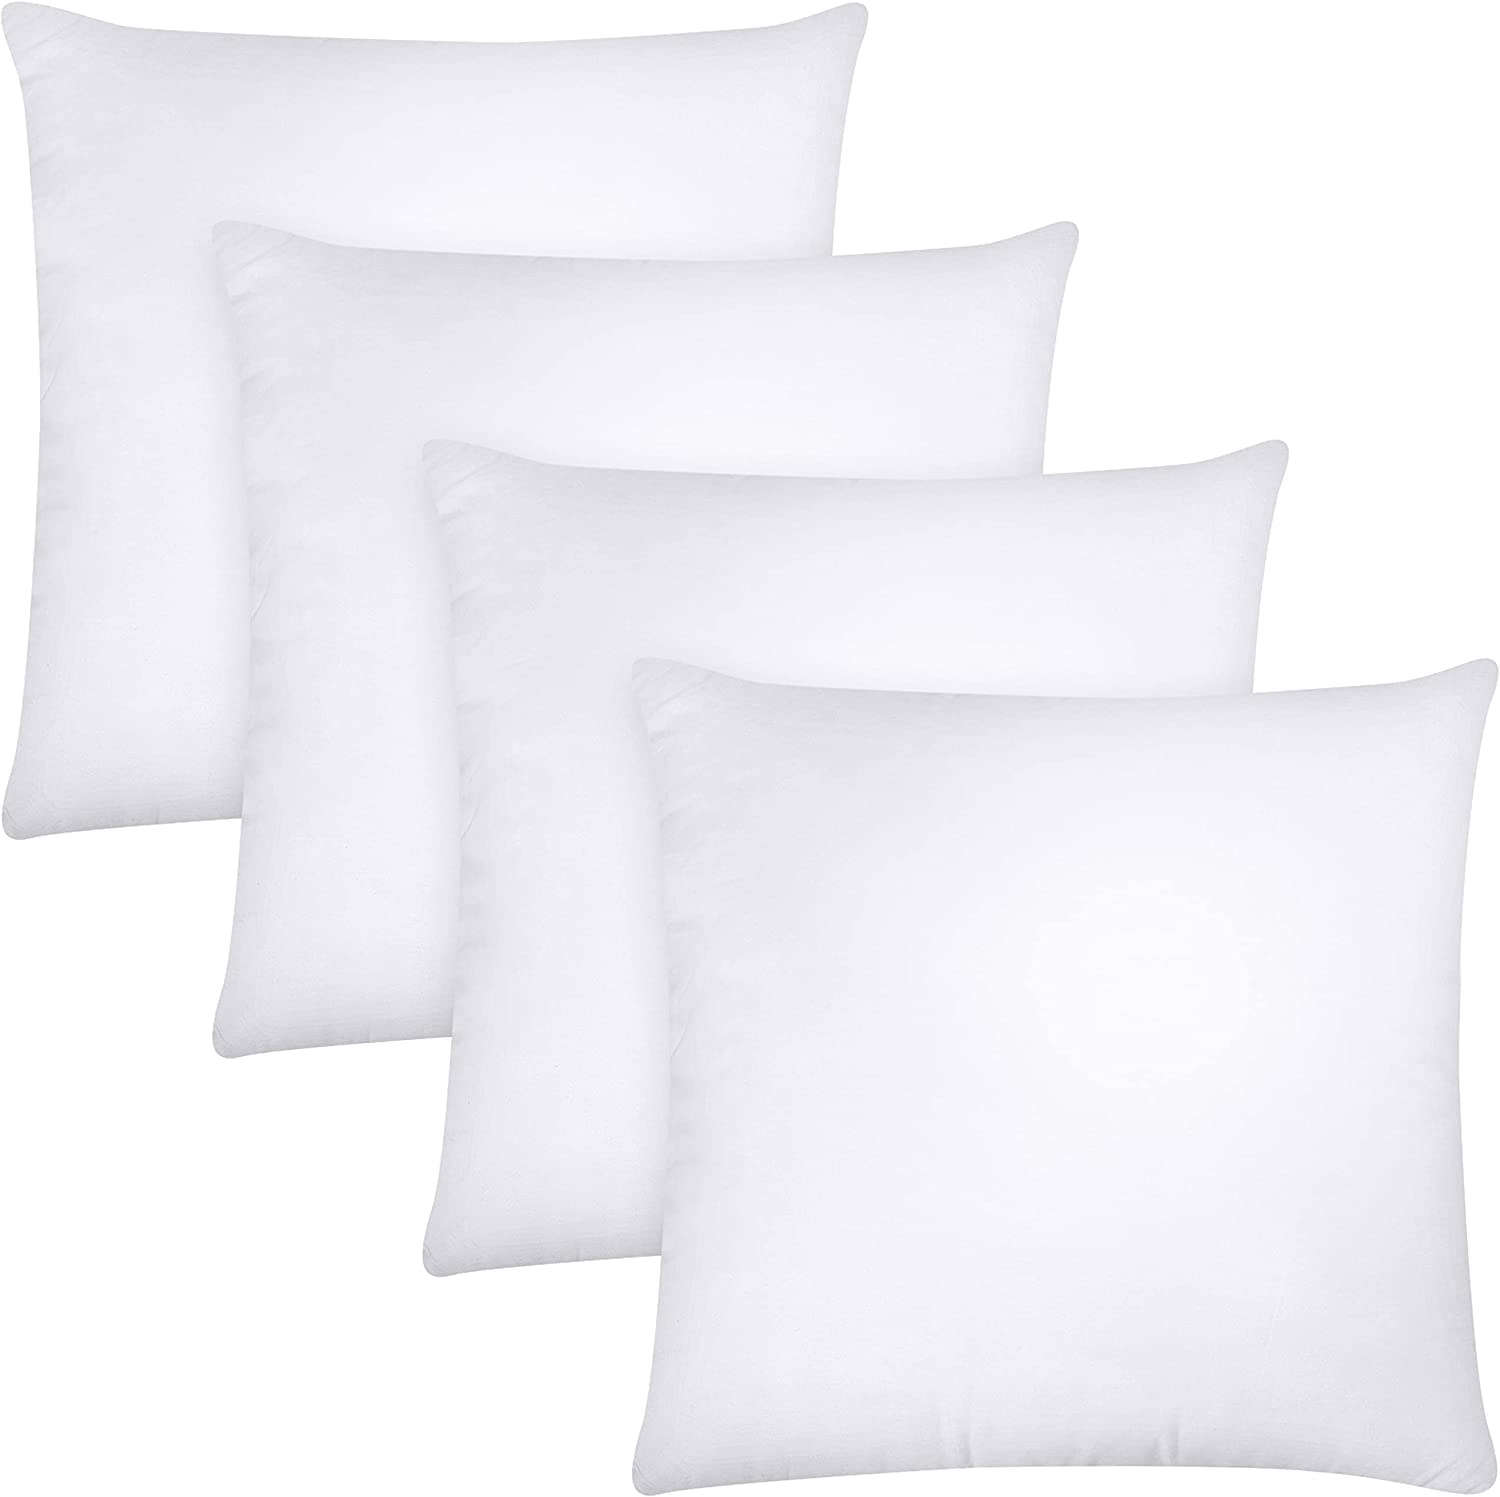 Utopia Bedding Throw Pillows Insert (Pack of 4, White)